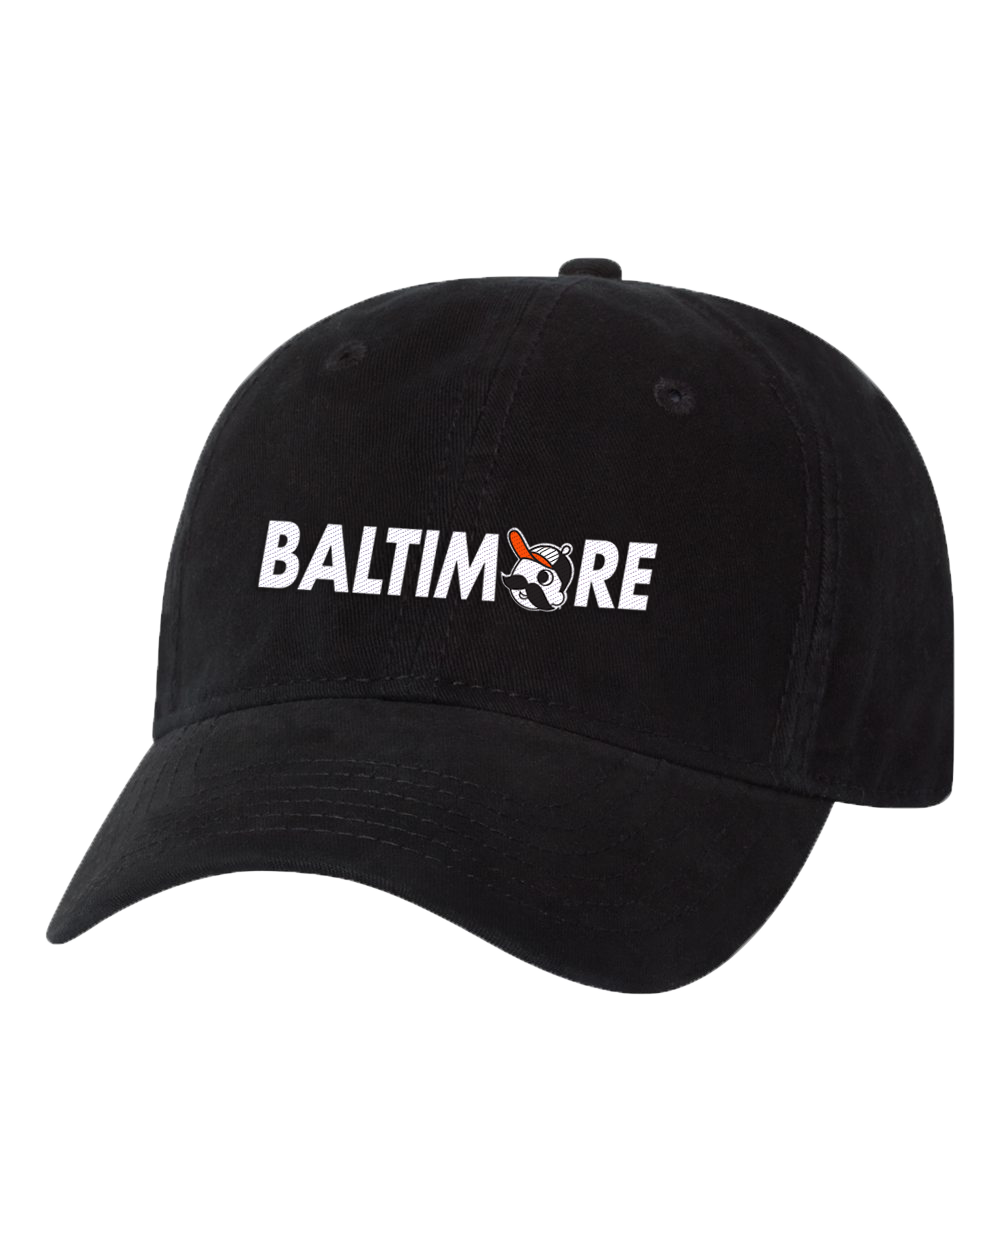 BALTIMORE - Boh Baseball Logo (Black) / Baseball Hat